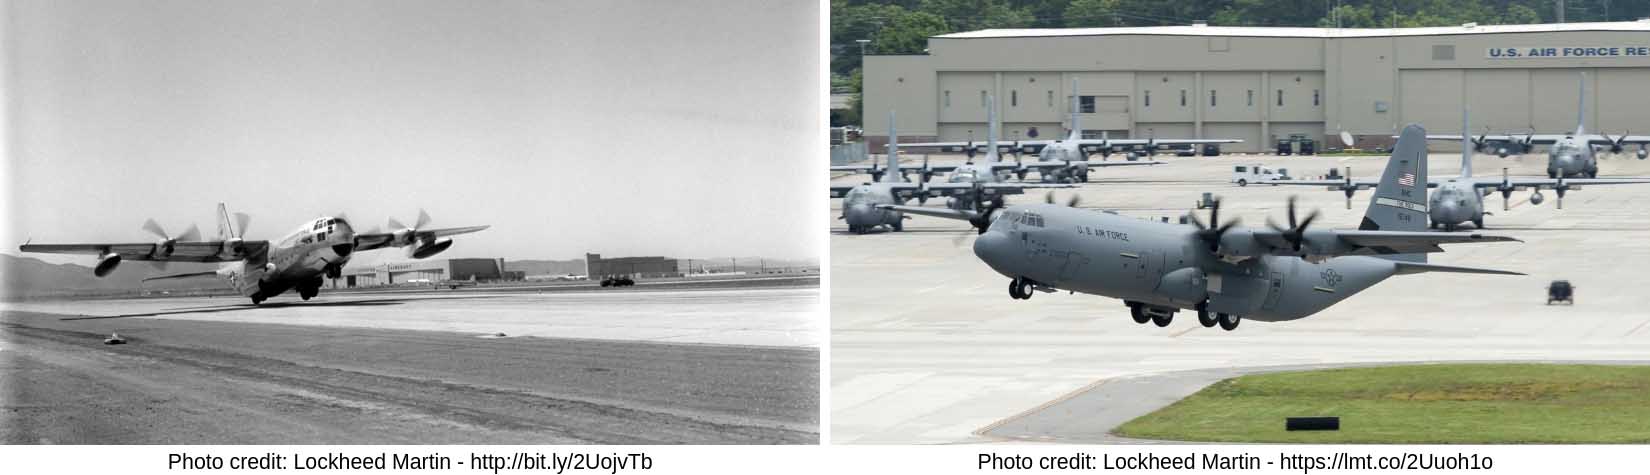 c-130 arkansas Photo credit_ Lockheed Martin